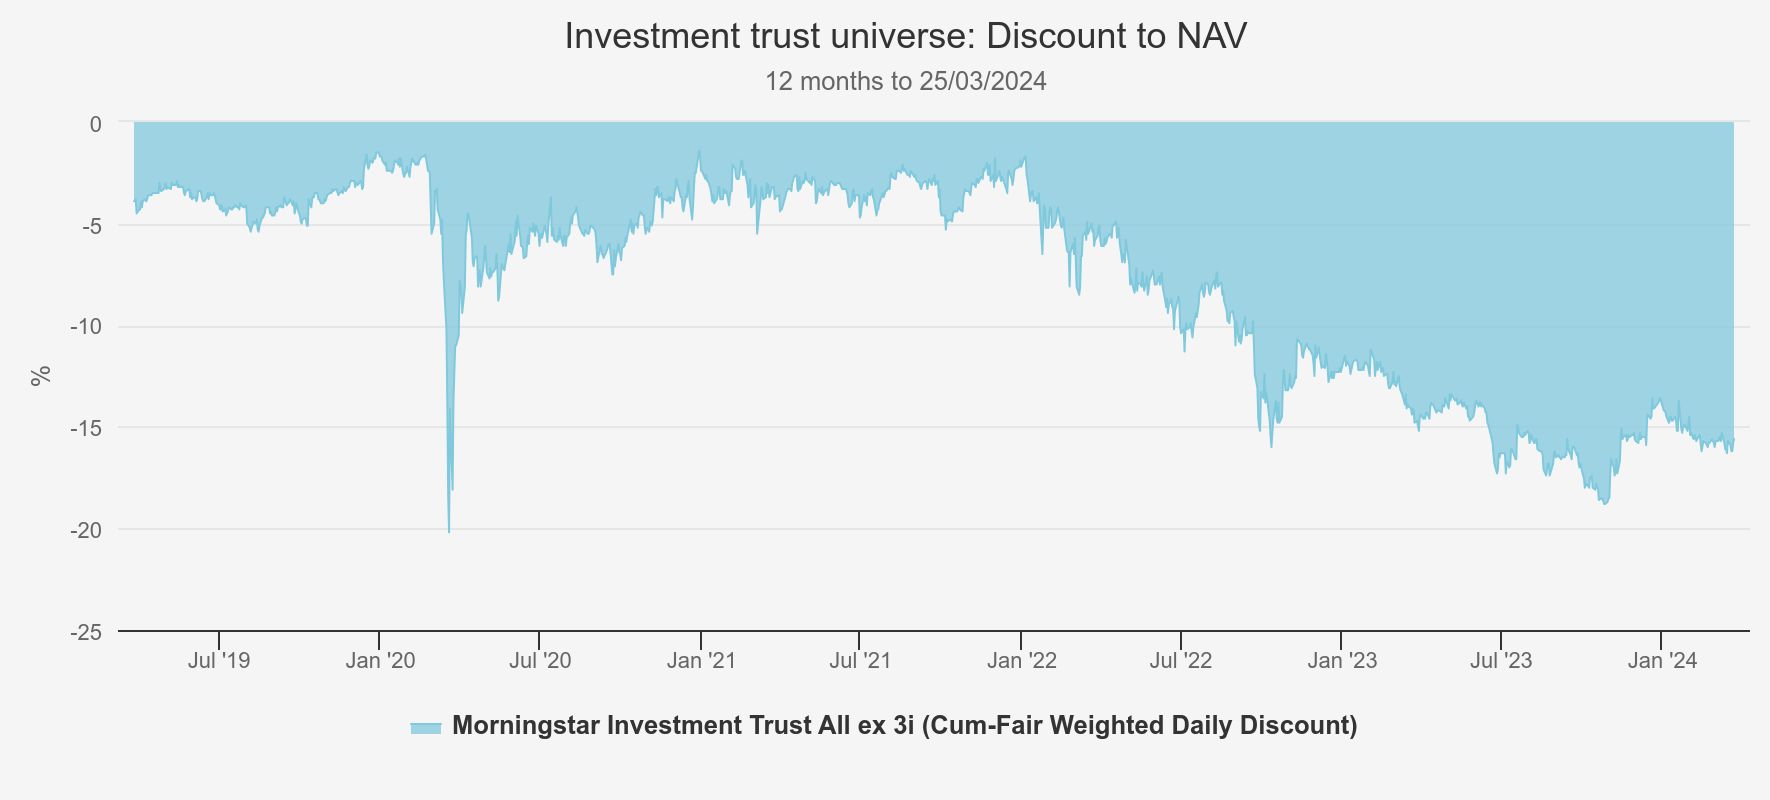 Kepler investment trust universe discount chart